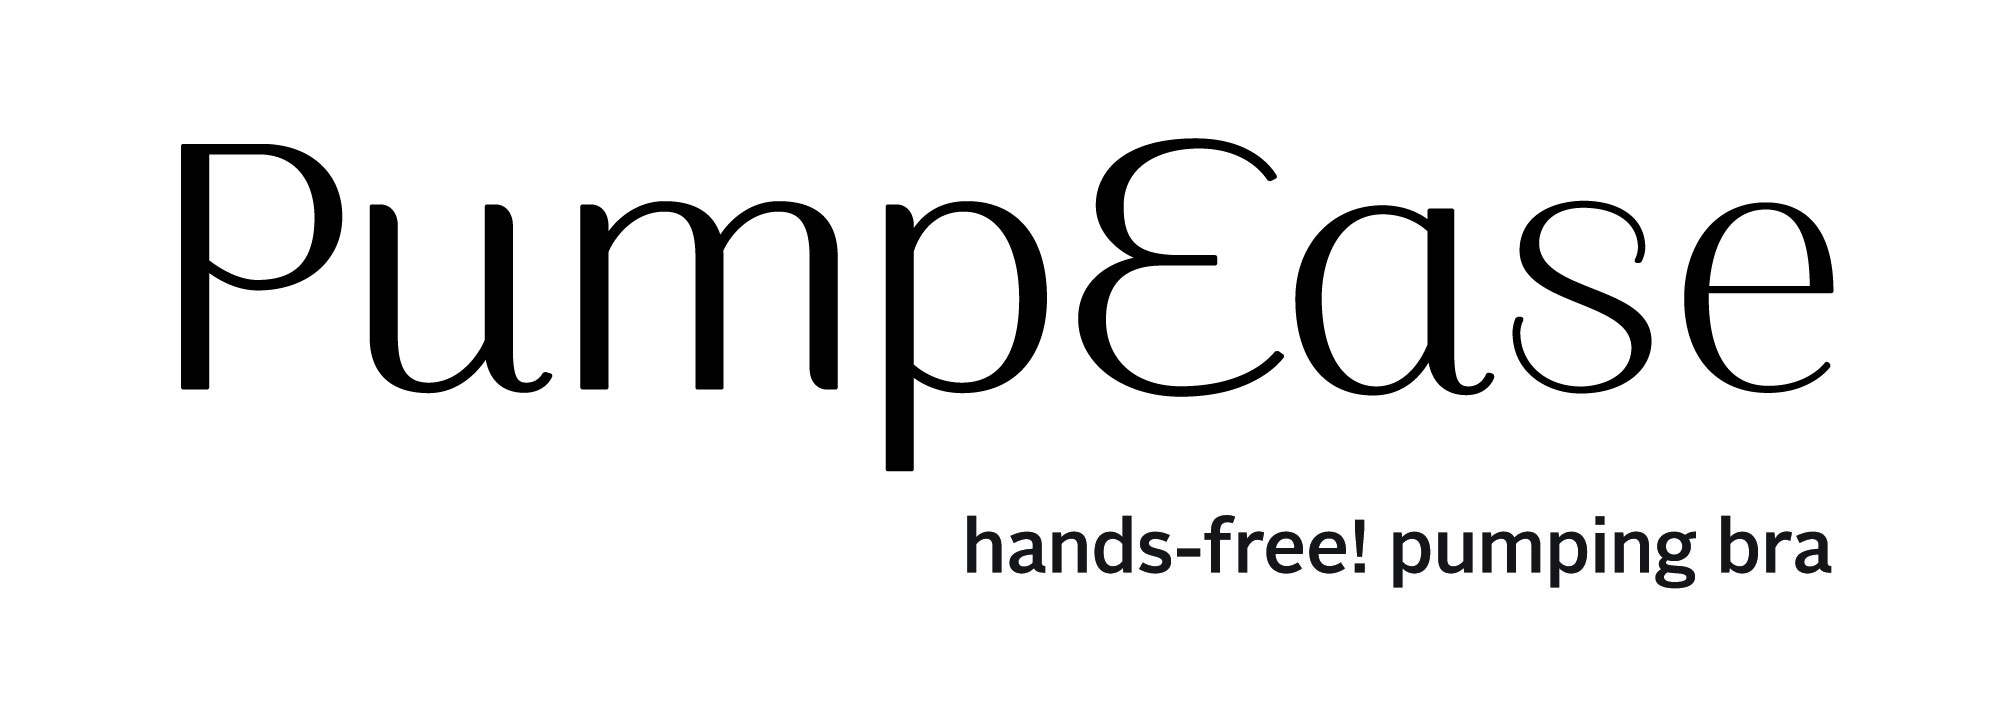 PumpEase hands-free pumping bra - USLCA